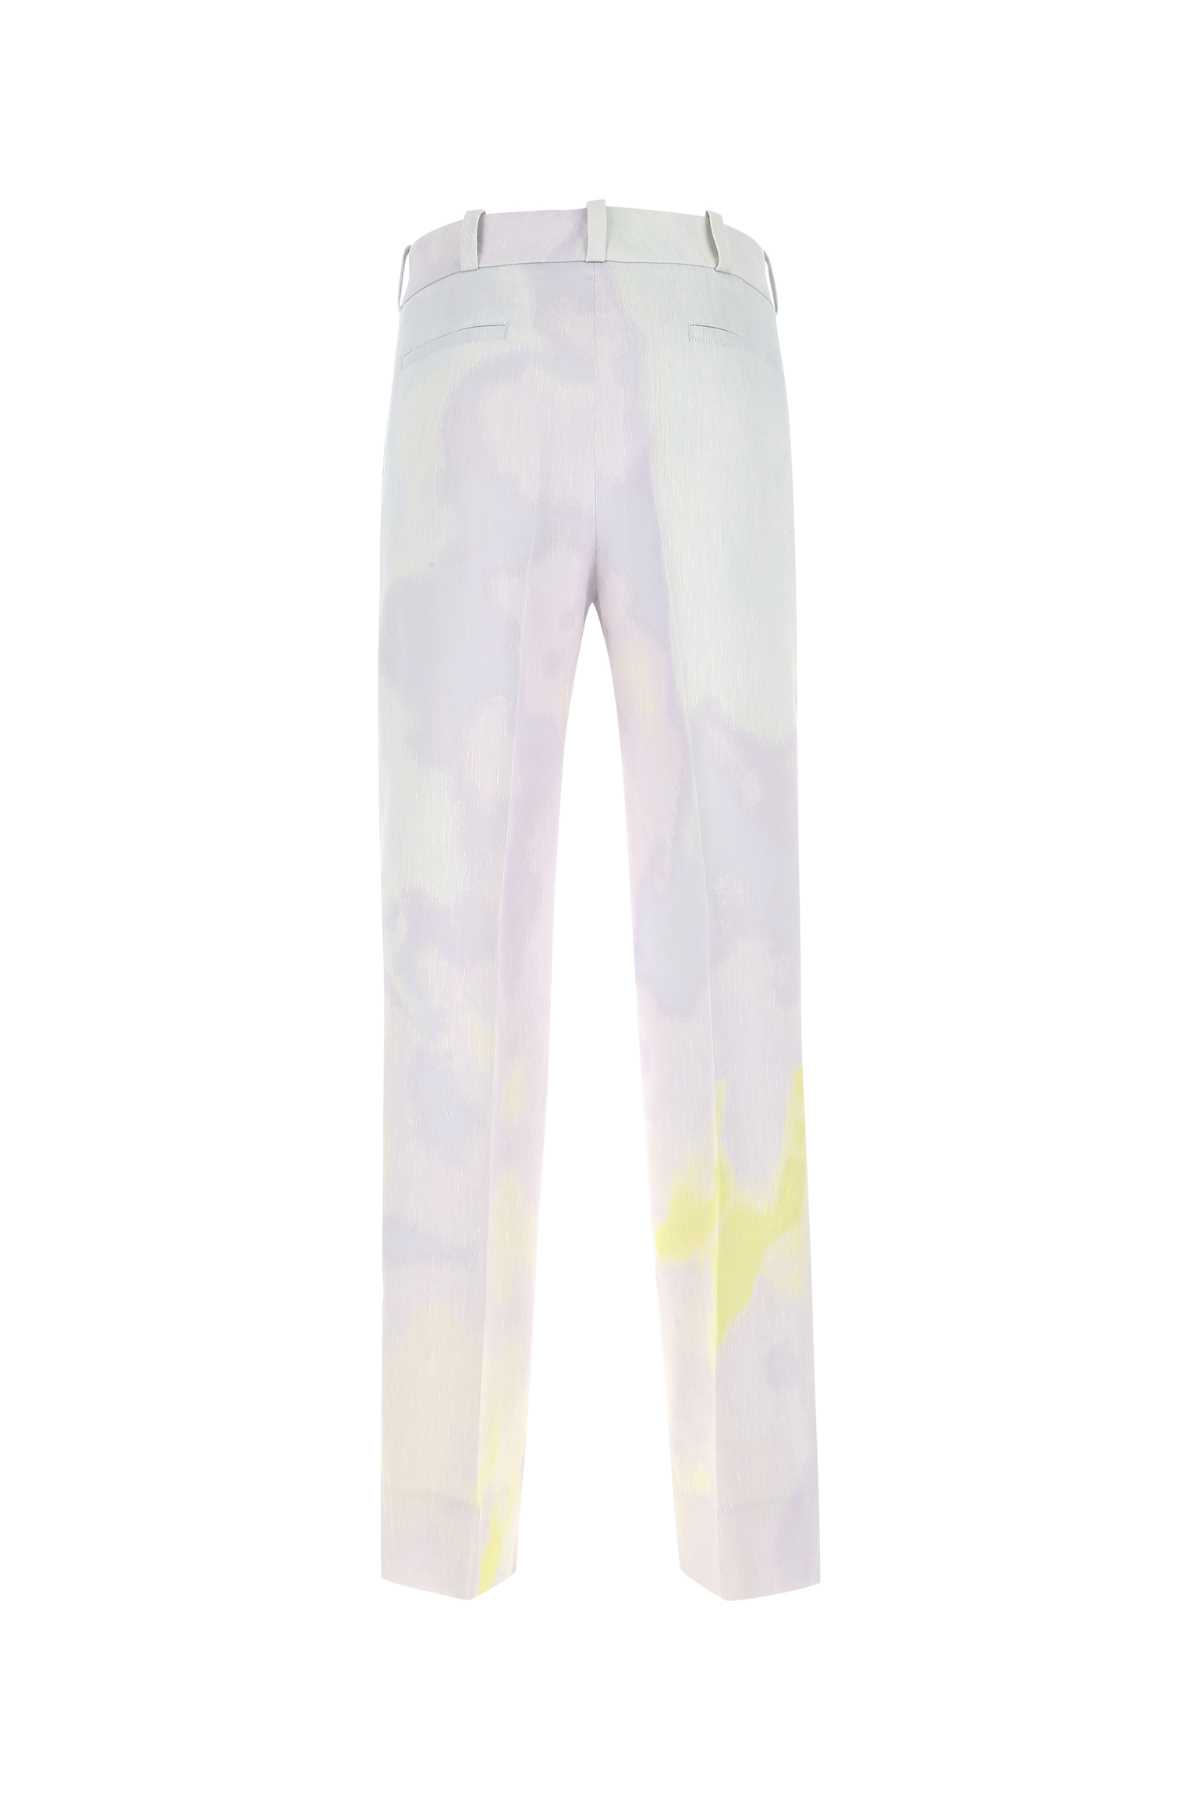 Fendi Printed Linen Blend Pant In F1d81